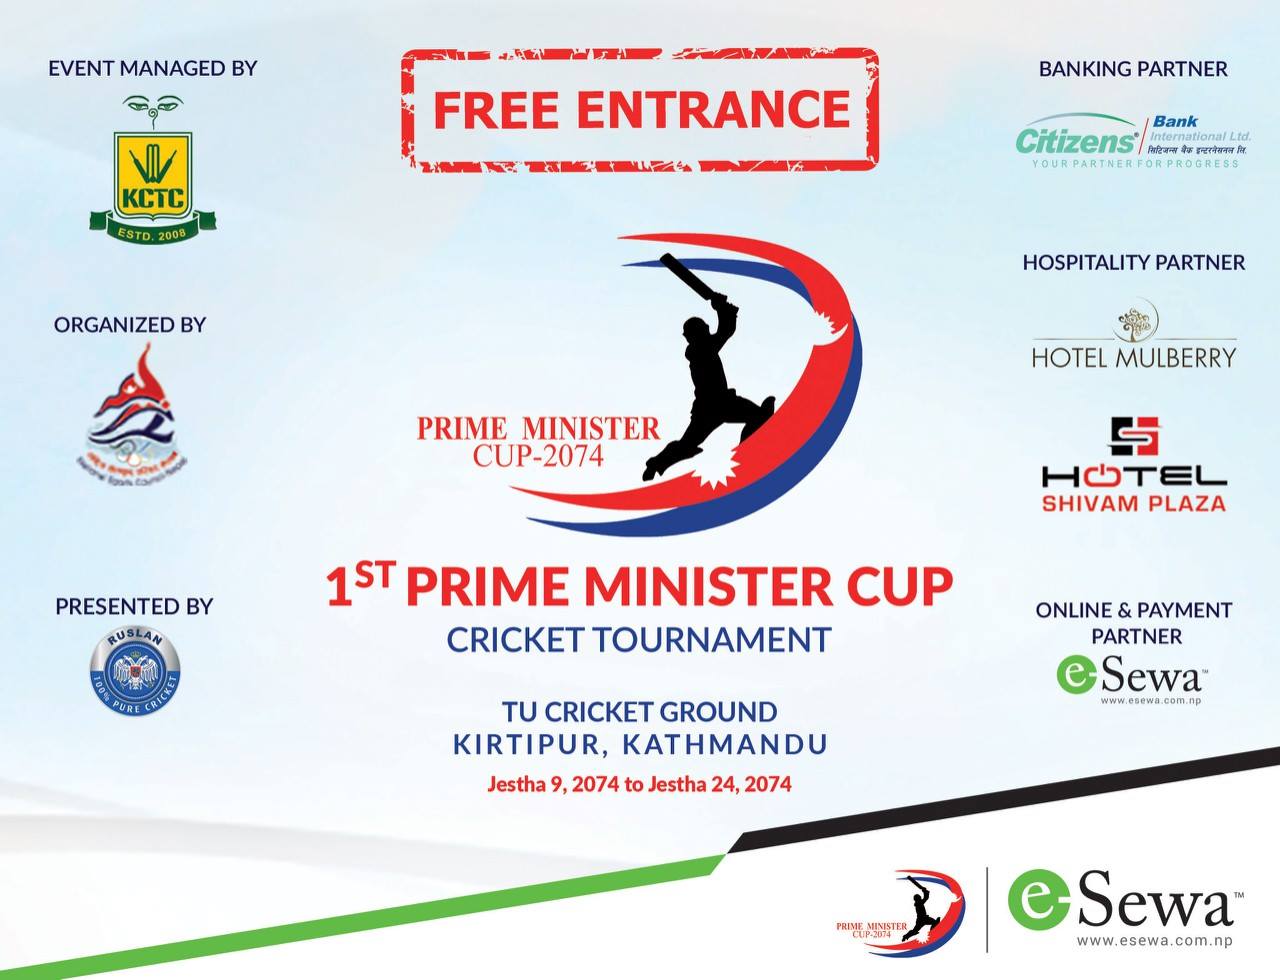 PM Cup T20 National Cricket Championship kicks off